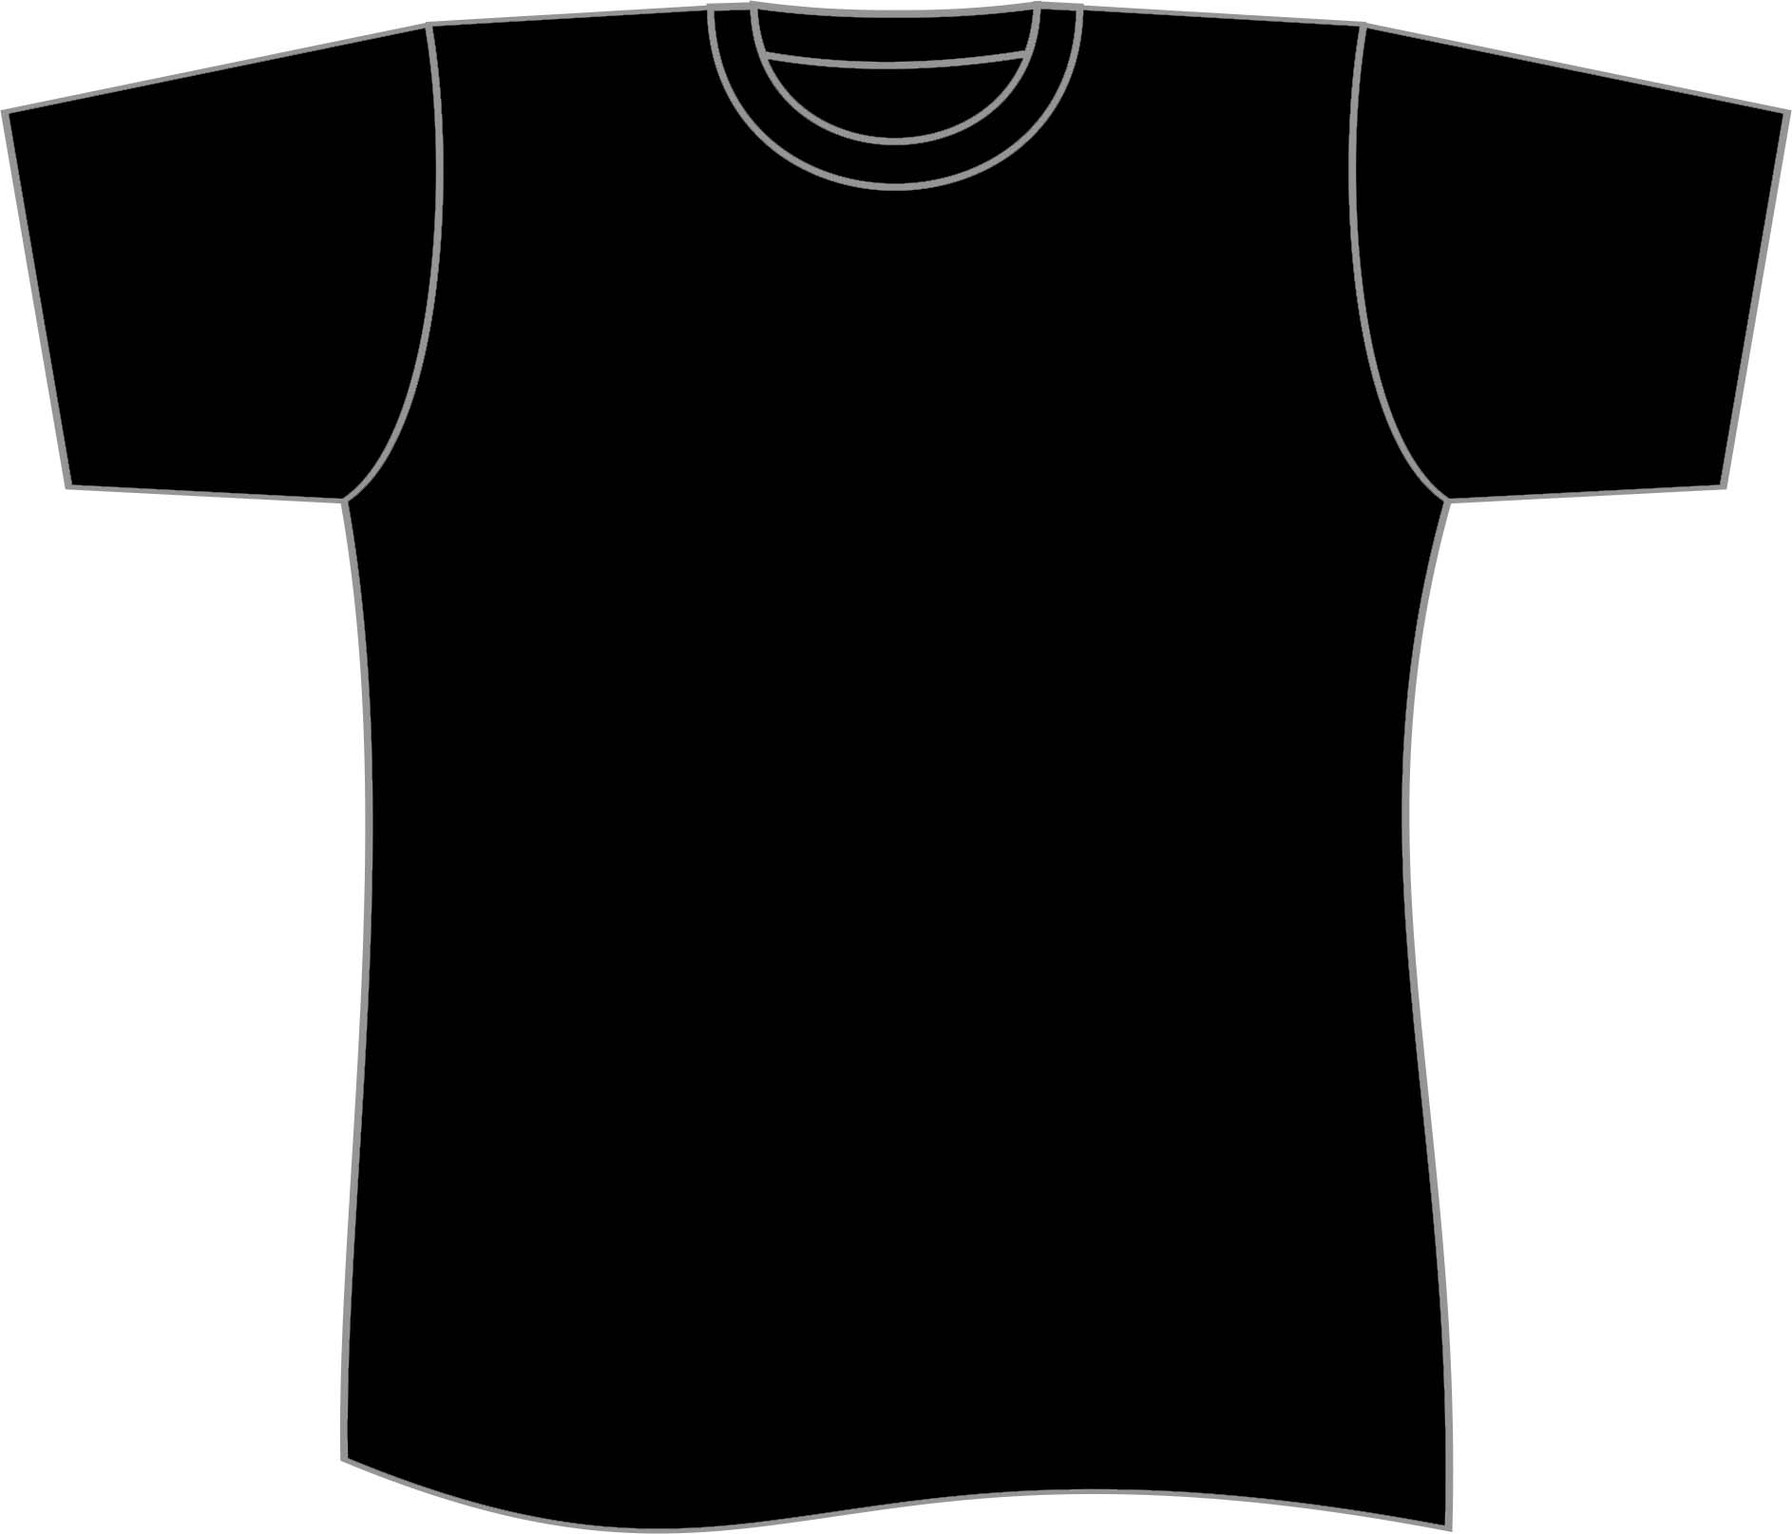 T-shirt plain black shirt template clipart free to use clip art resource